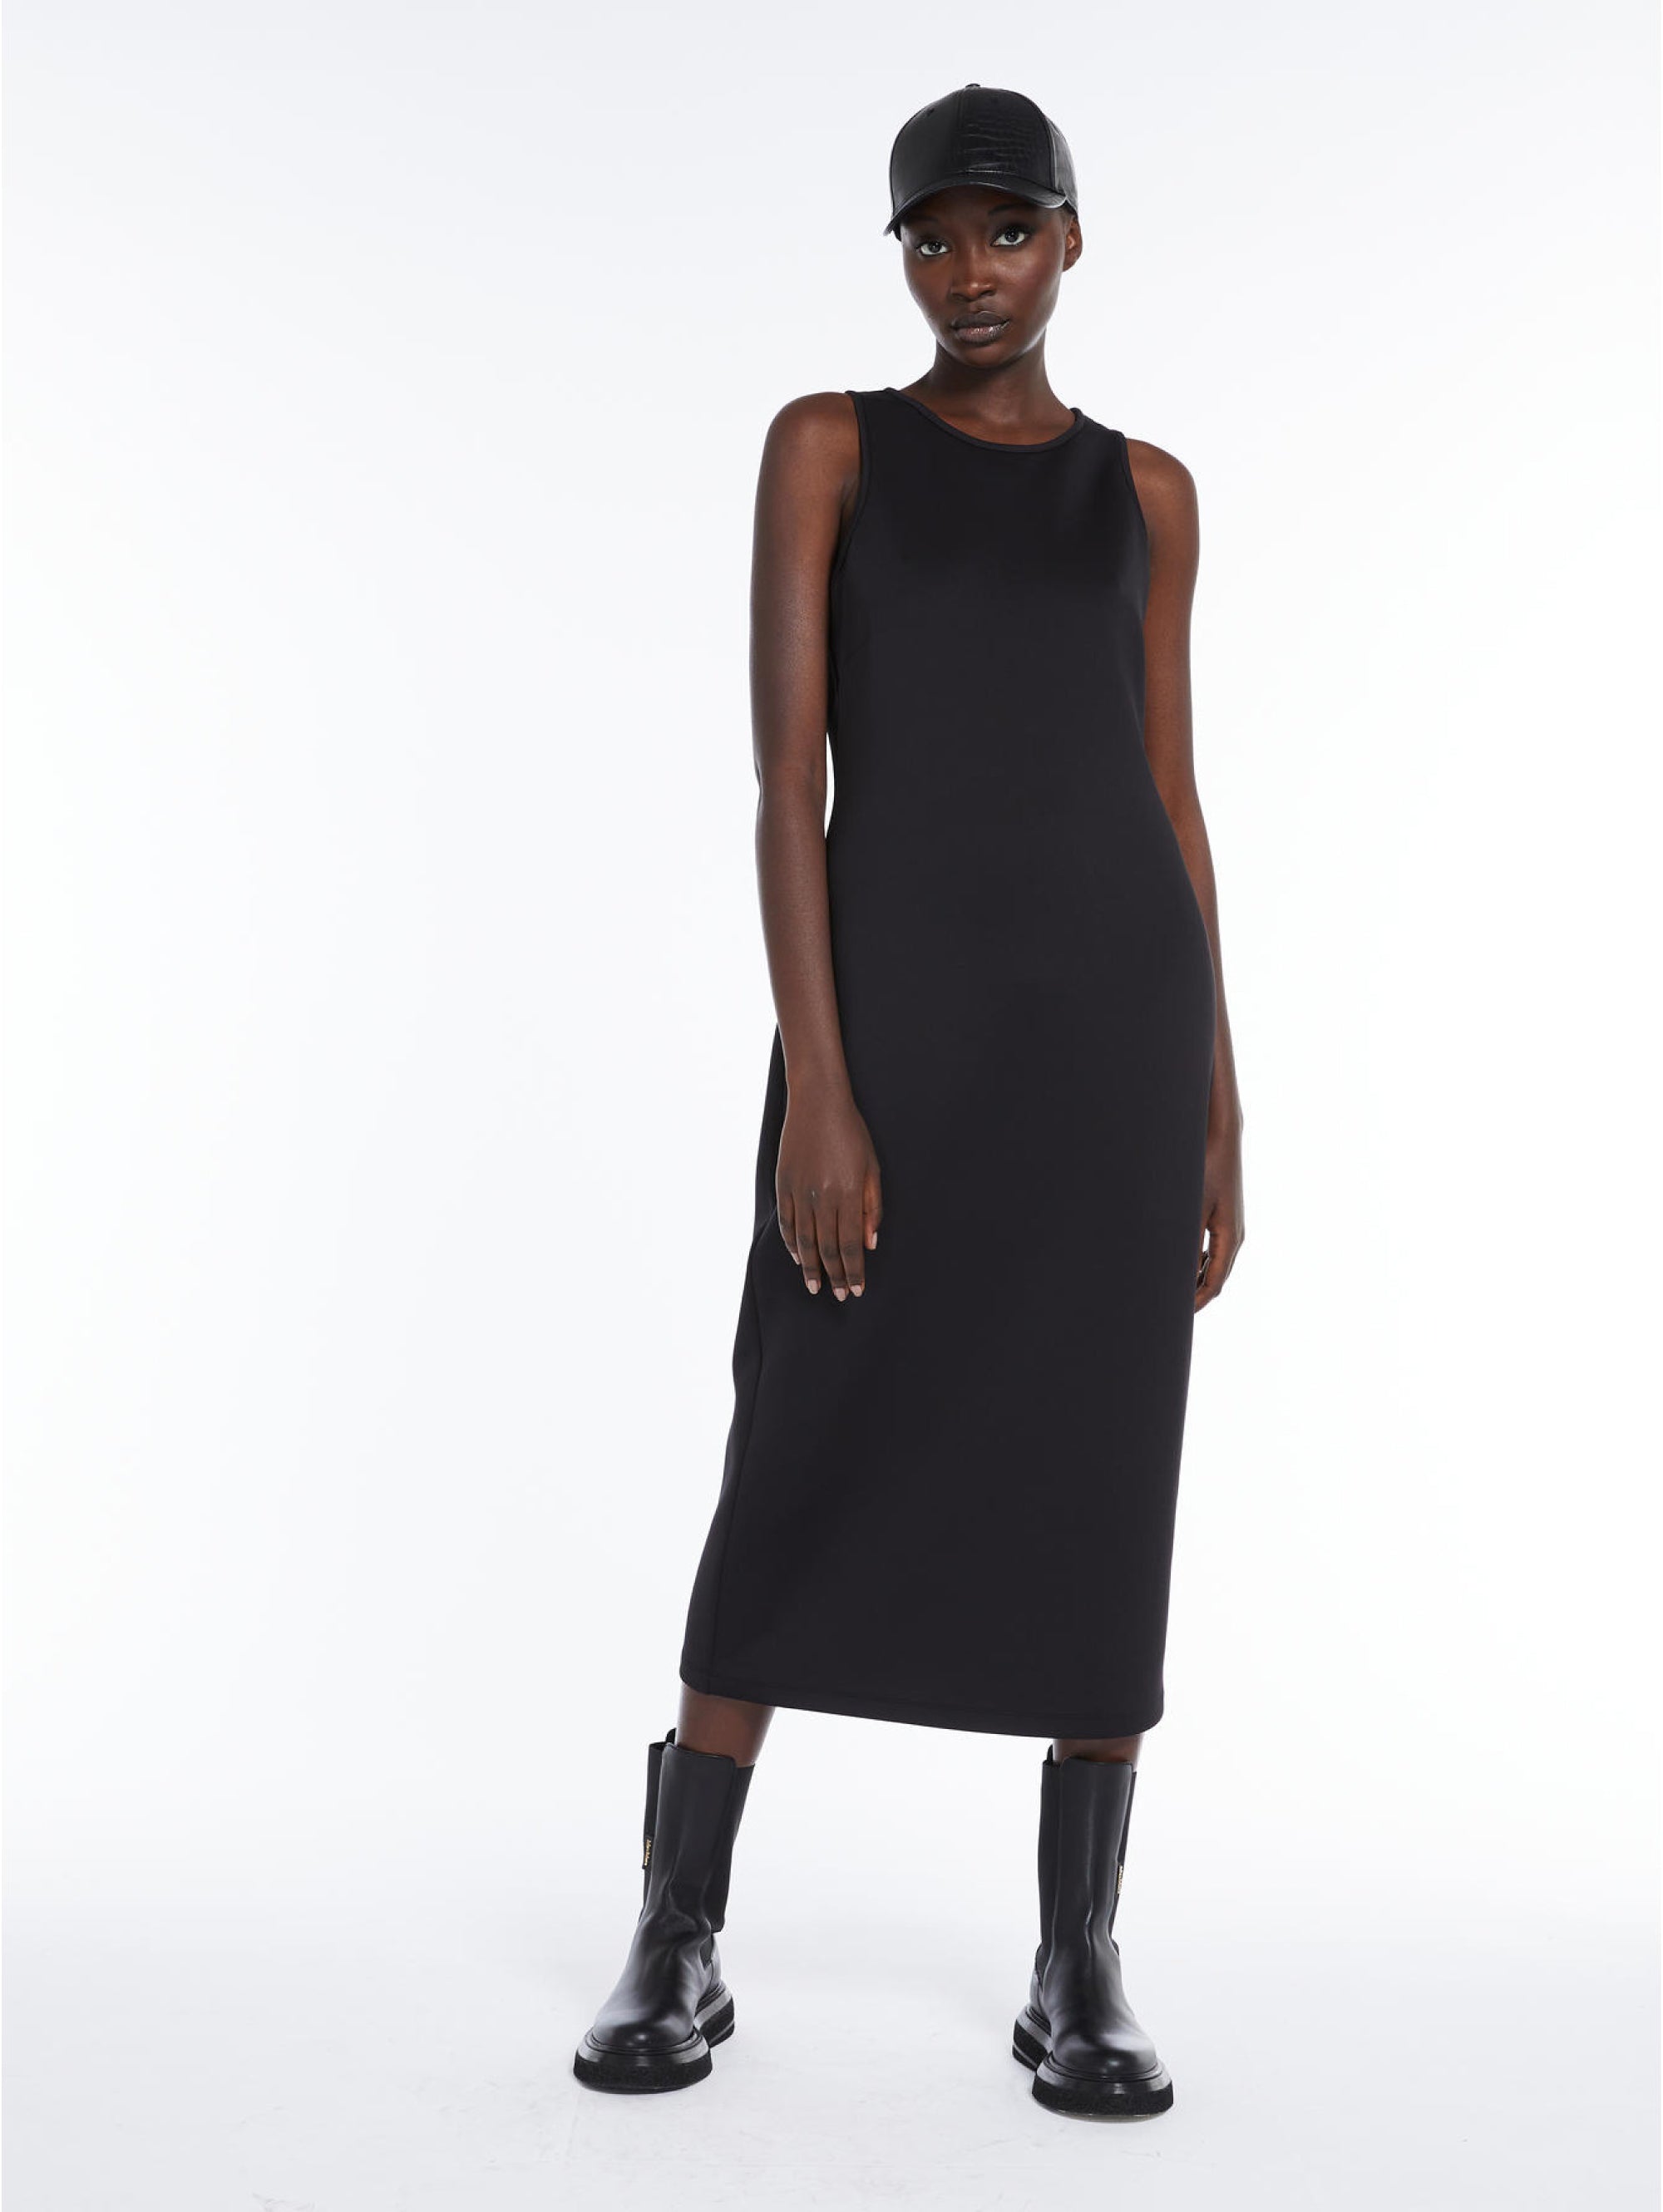 Sheath dress in black technical fabric